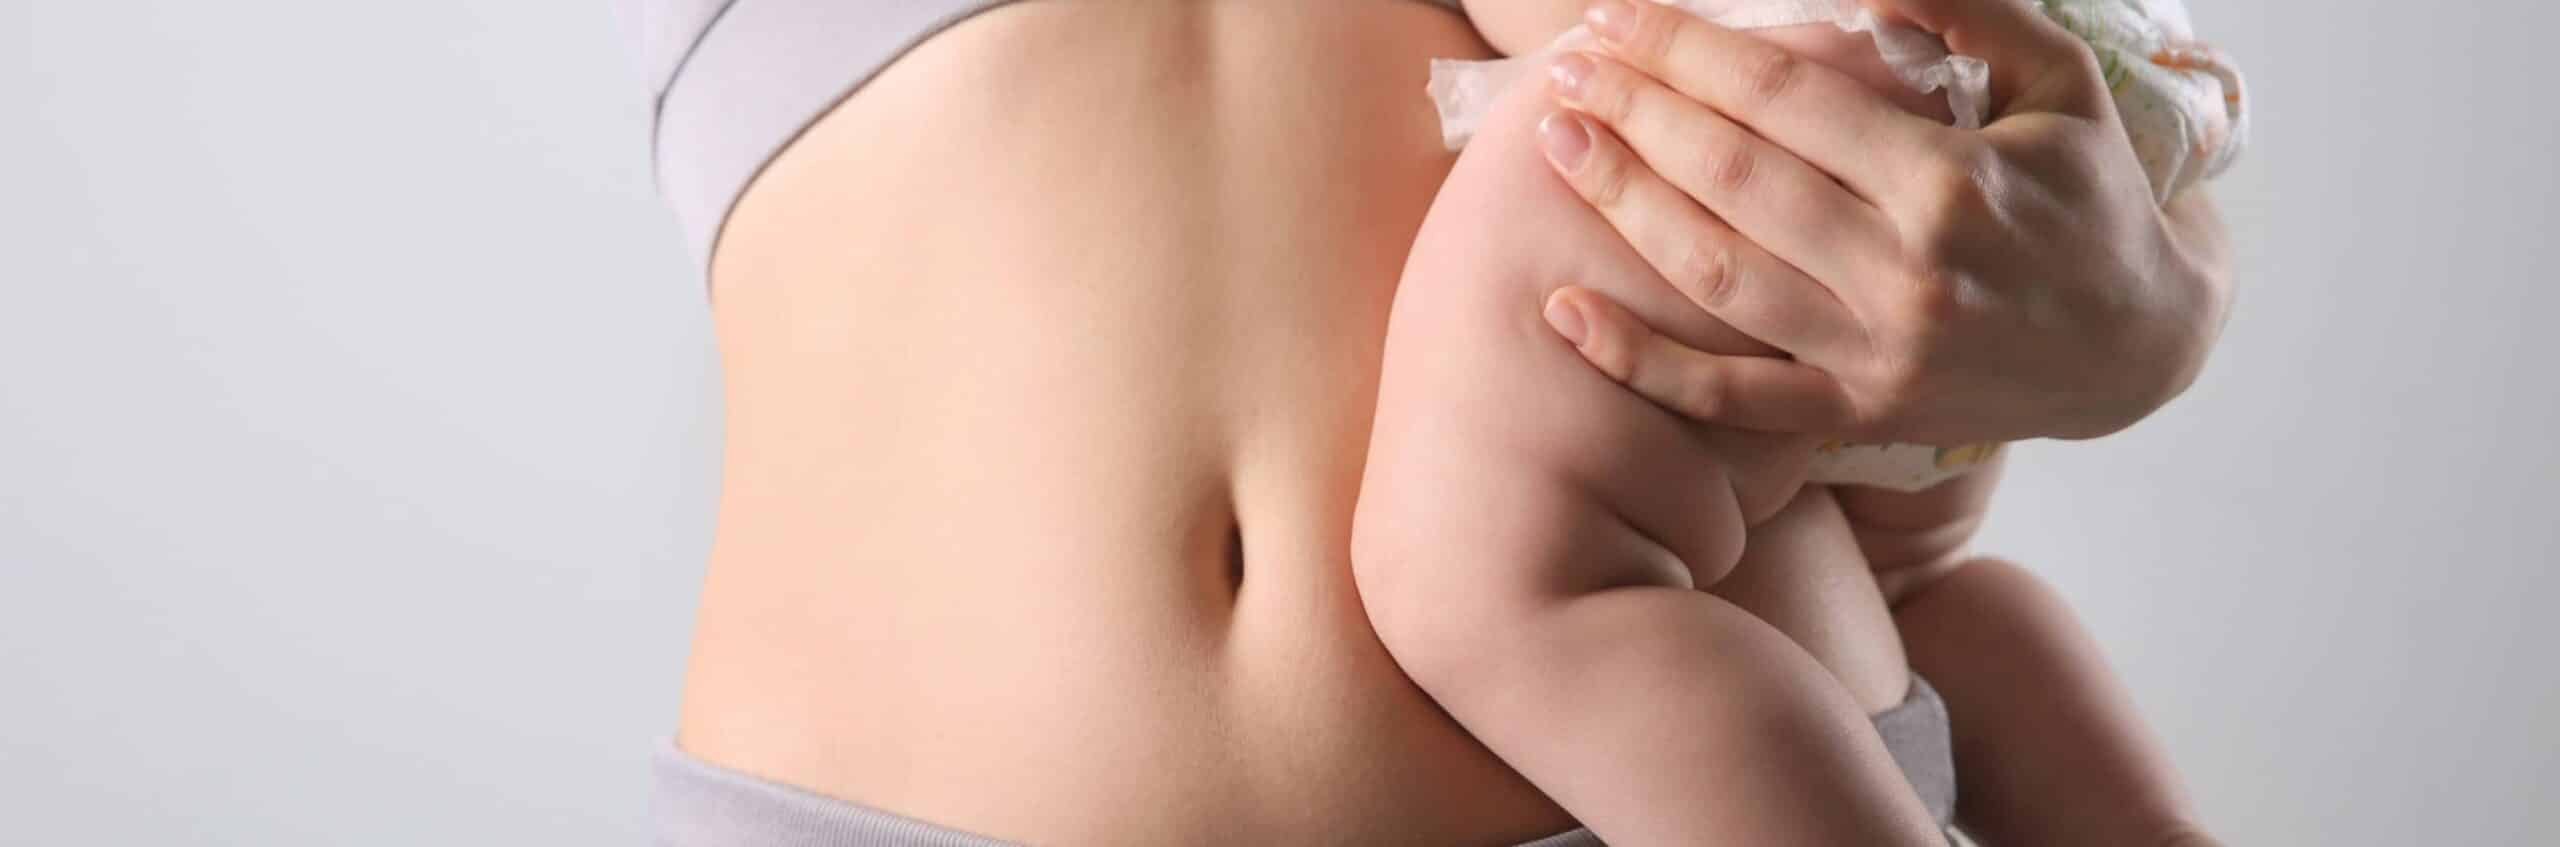 L’abdominoplastie post-partum : est-ce possible ? | Dr Elisa Pecorelli| Paris